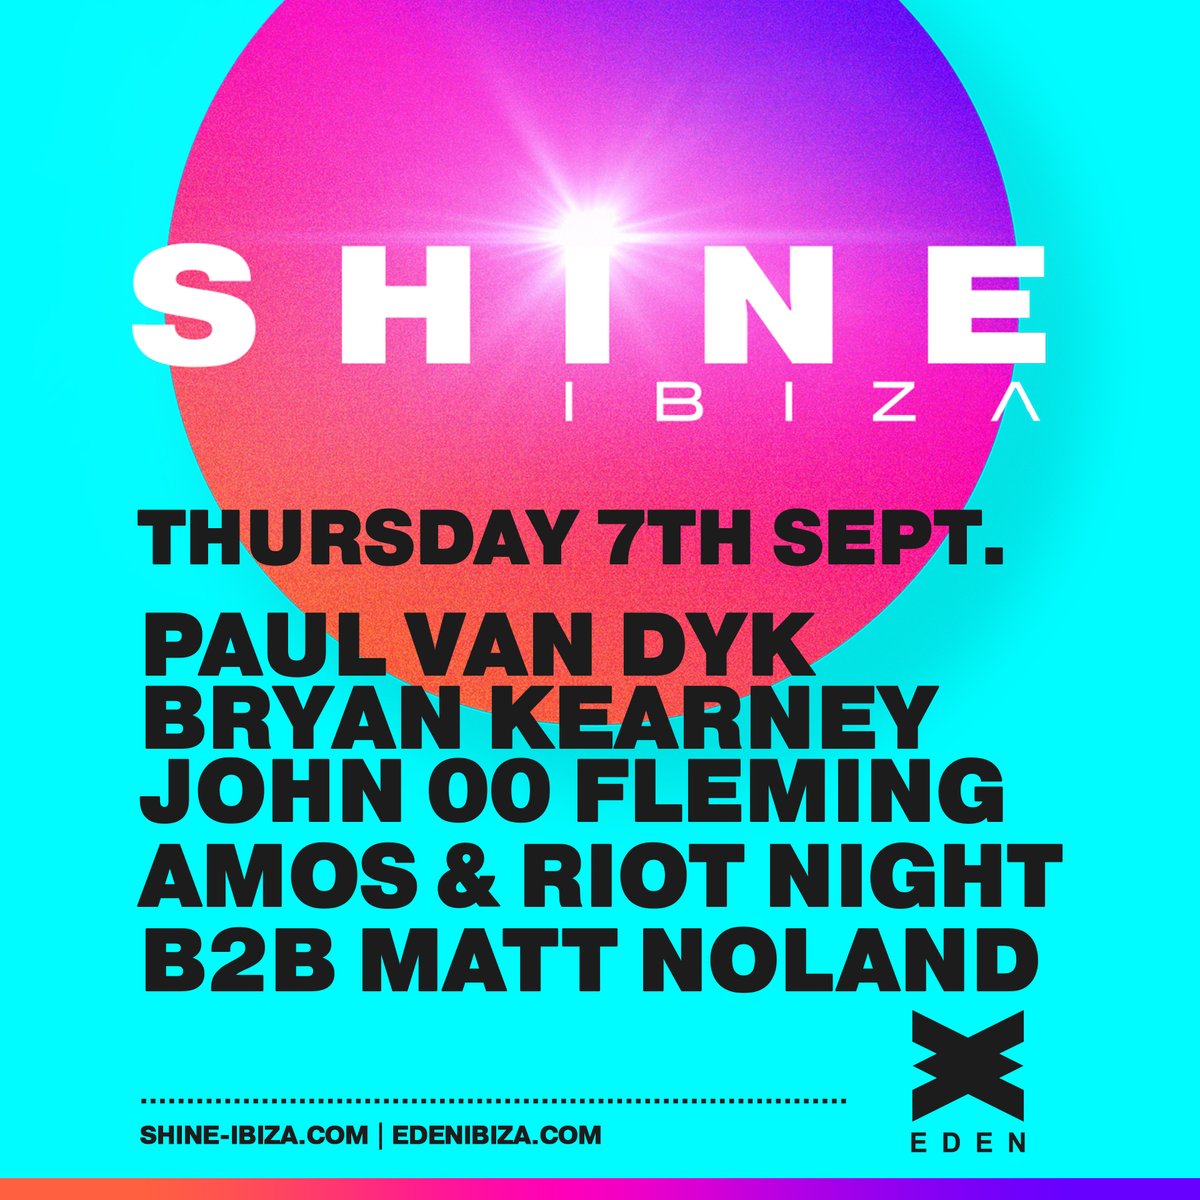 Illuminating the night at @SHINE_Ibiza with @bryankearney @John00fleming
@AmosRiotNight and Matt Noland 👉 swipe.fm/shine-ibiza
#Ibiza #SHINEIbiza